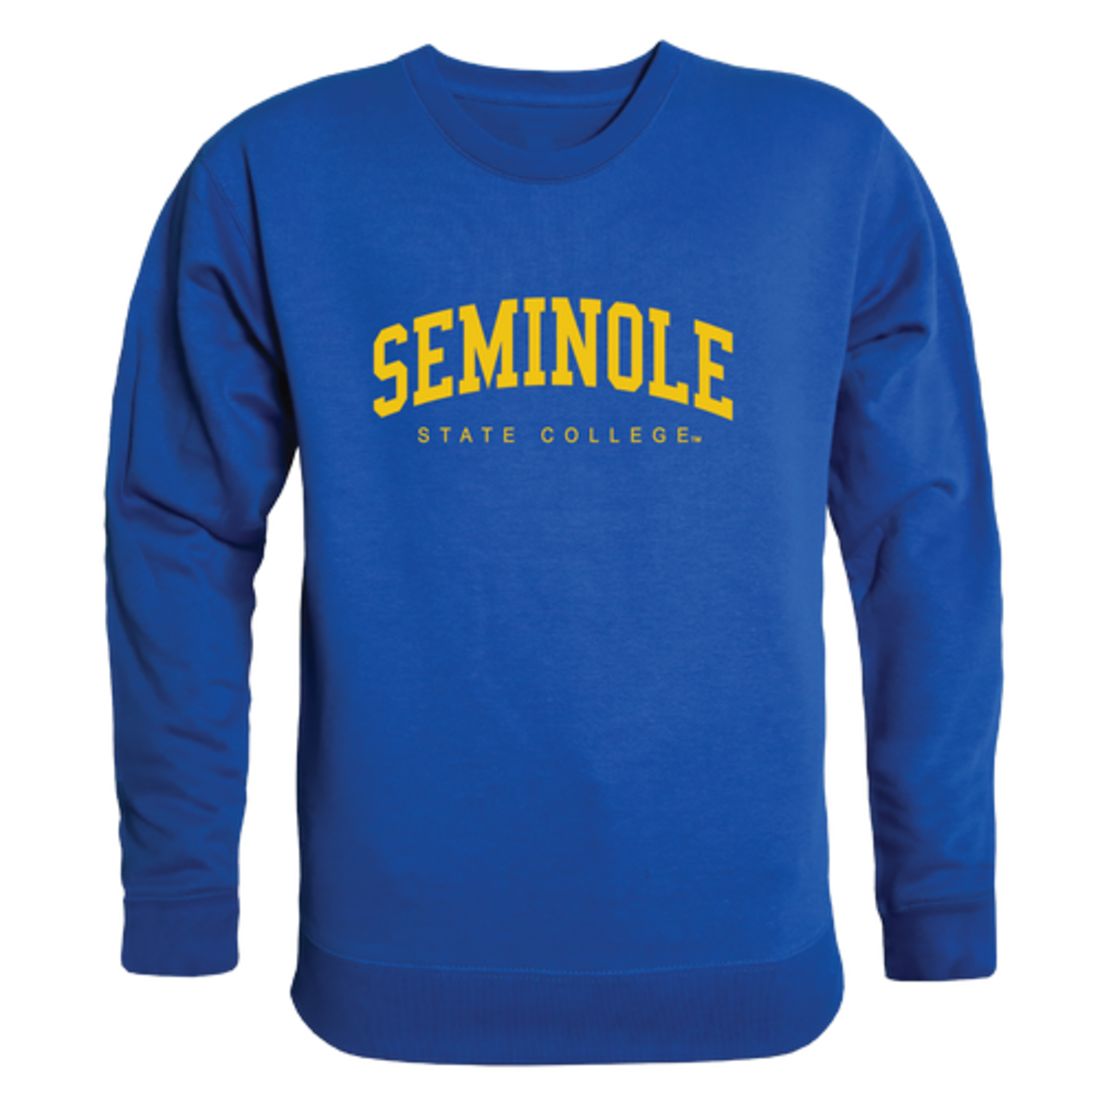 Seminole-State-College-Raiders-Arch-Fleece-Crewneck-Pullover-Sweatshirt